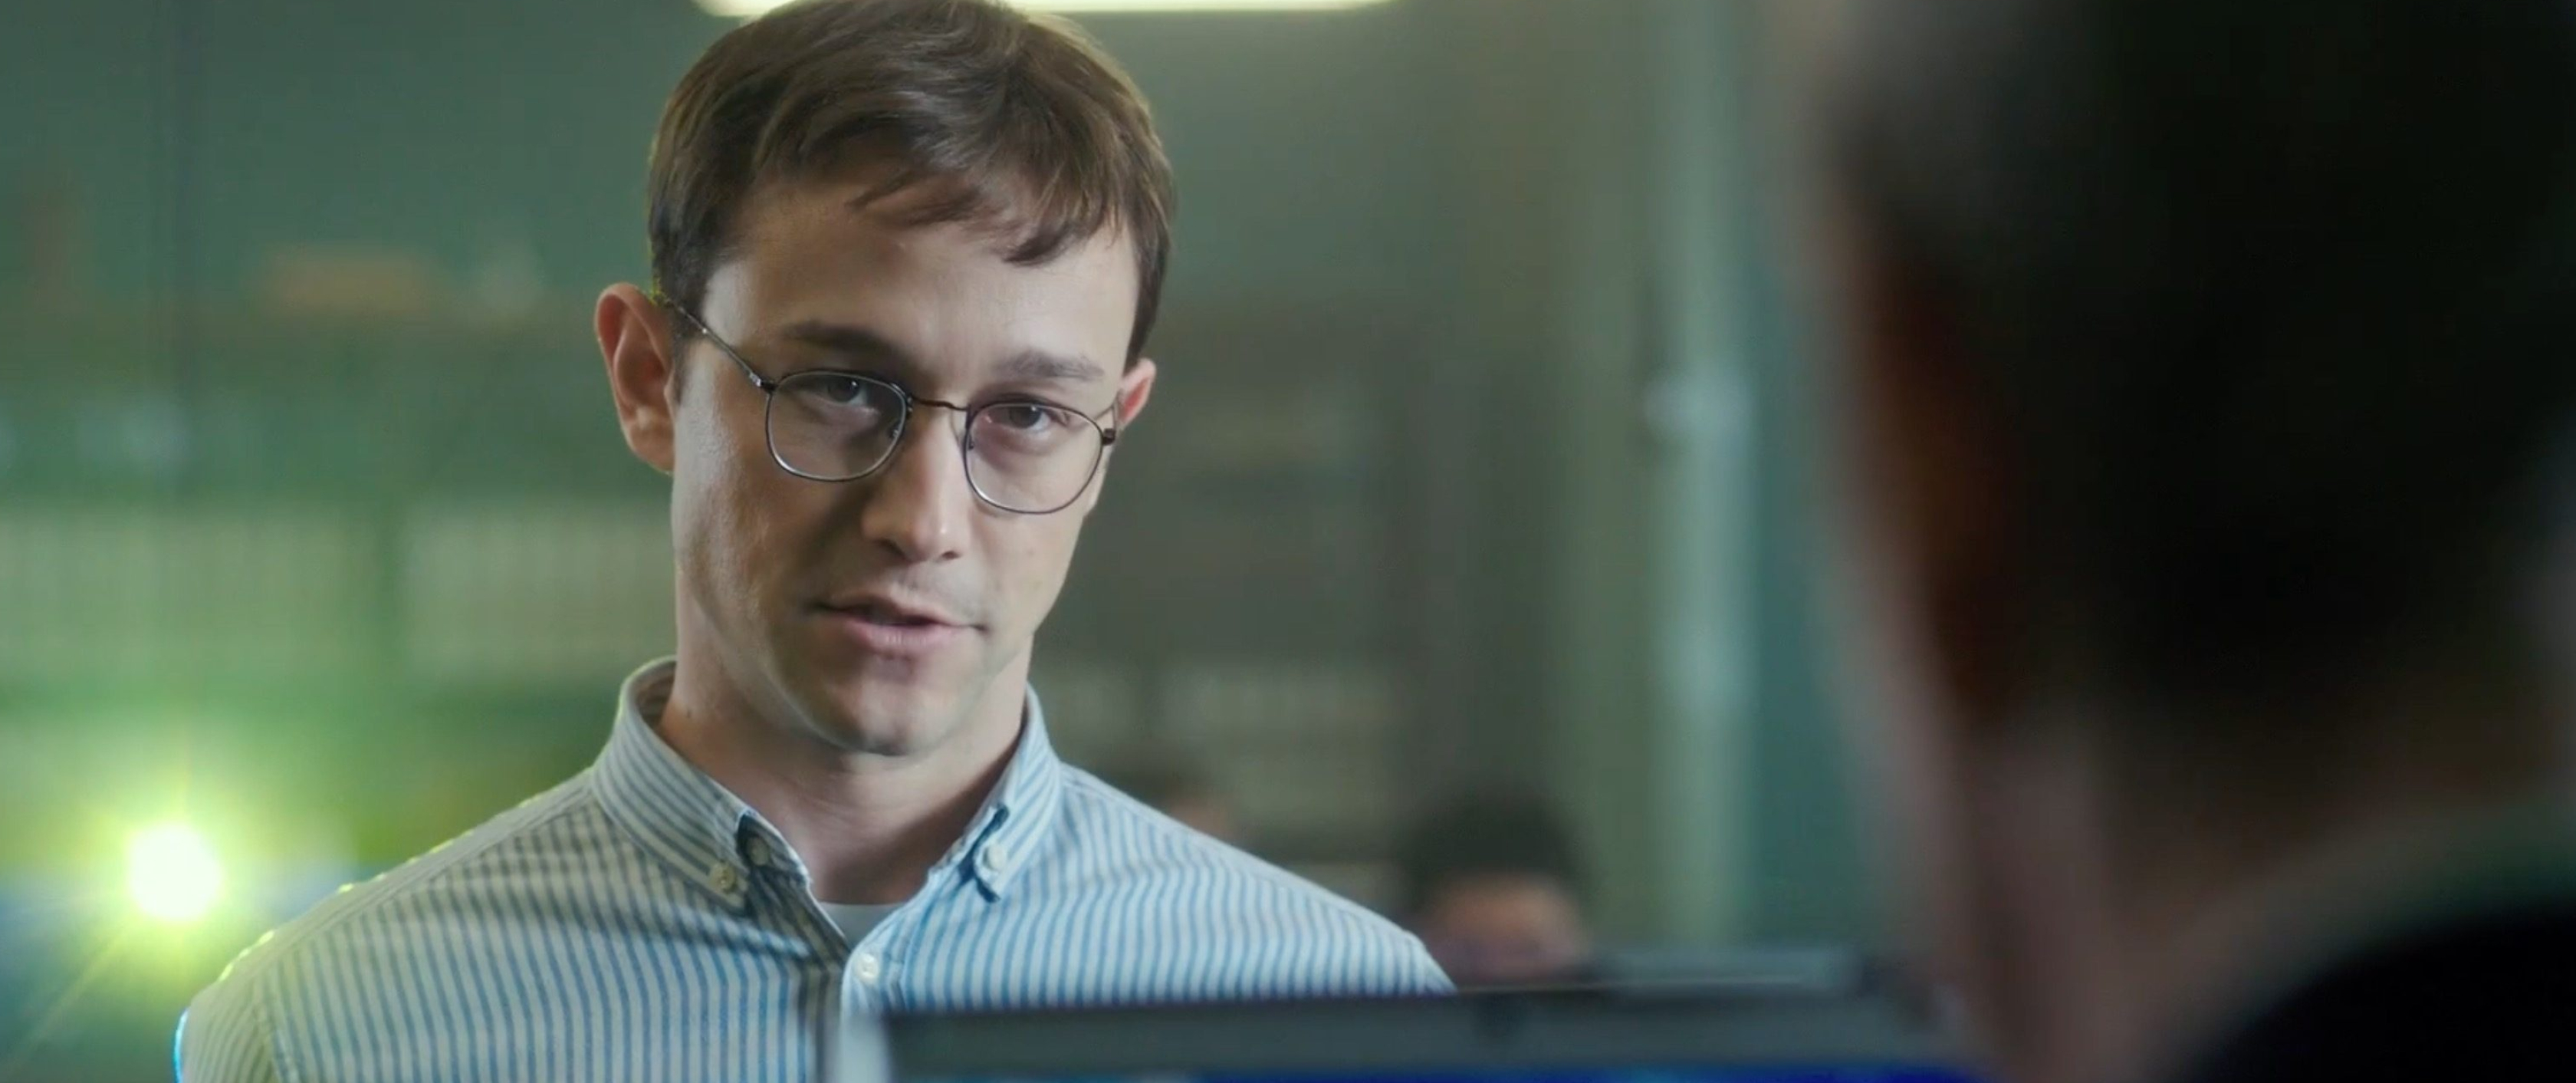 Snowden movie, Official trailer, Sneak peak, Movie teaser, 3360x1420 Dual Screen Desktop